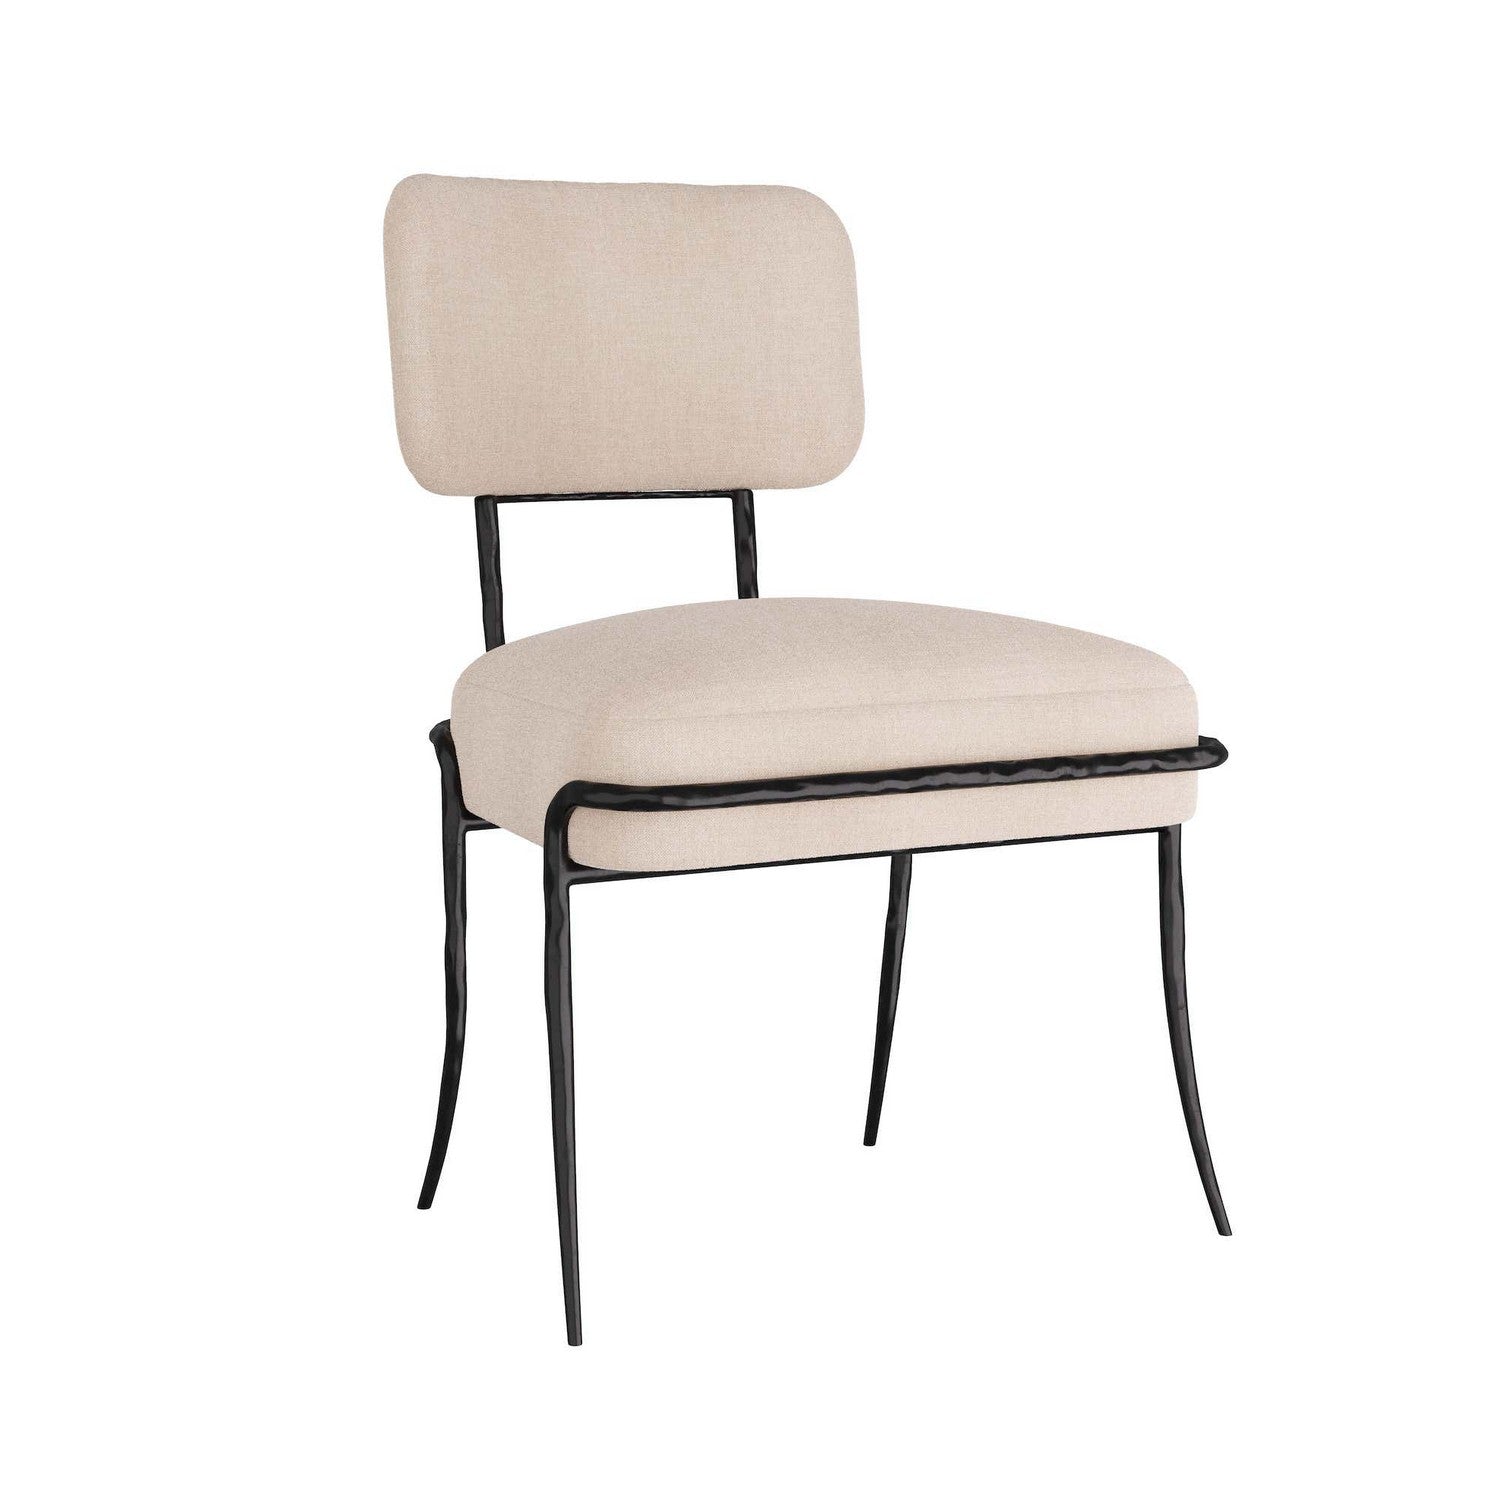 Arteriors - GDFRI01 - Chair - Mosquito - Natural Linen/Blackened Iron